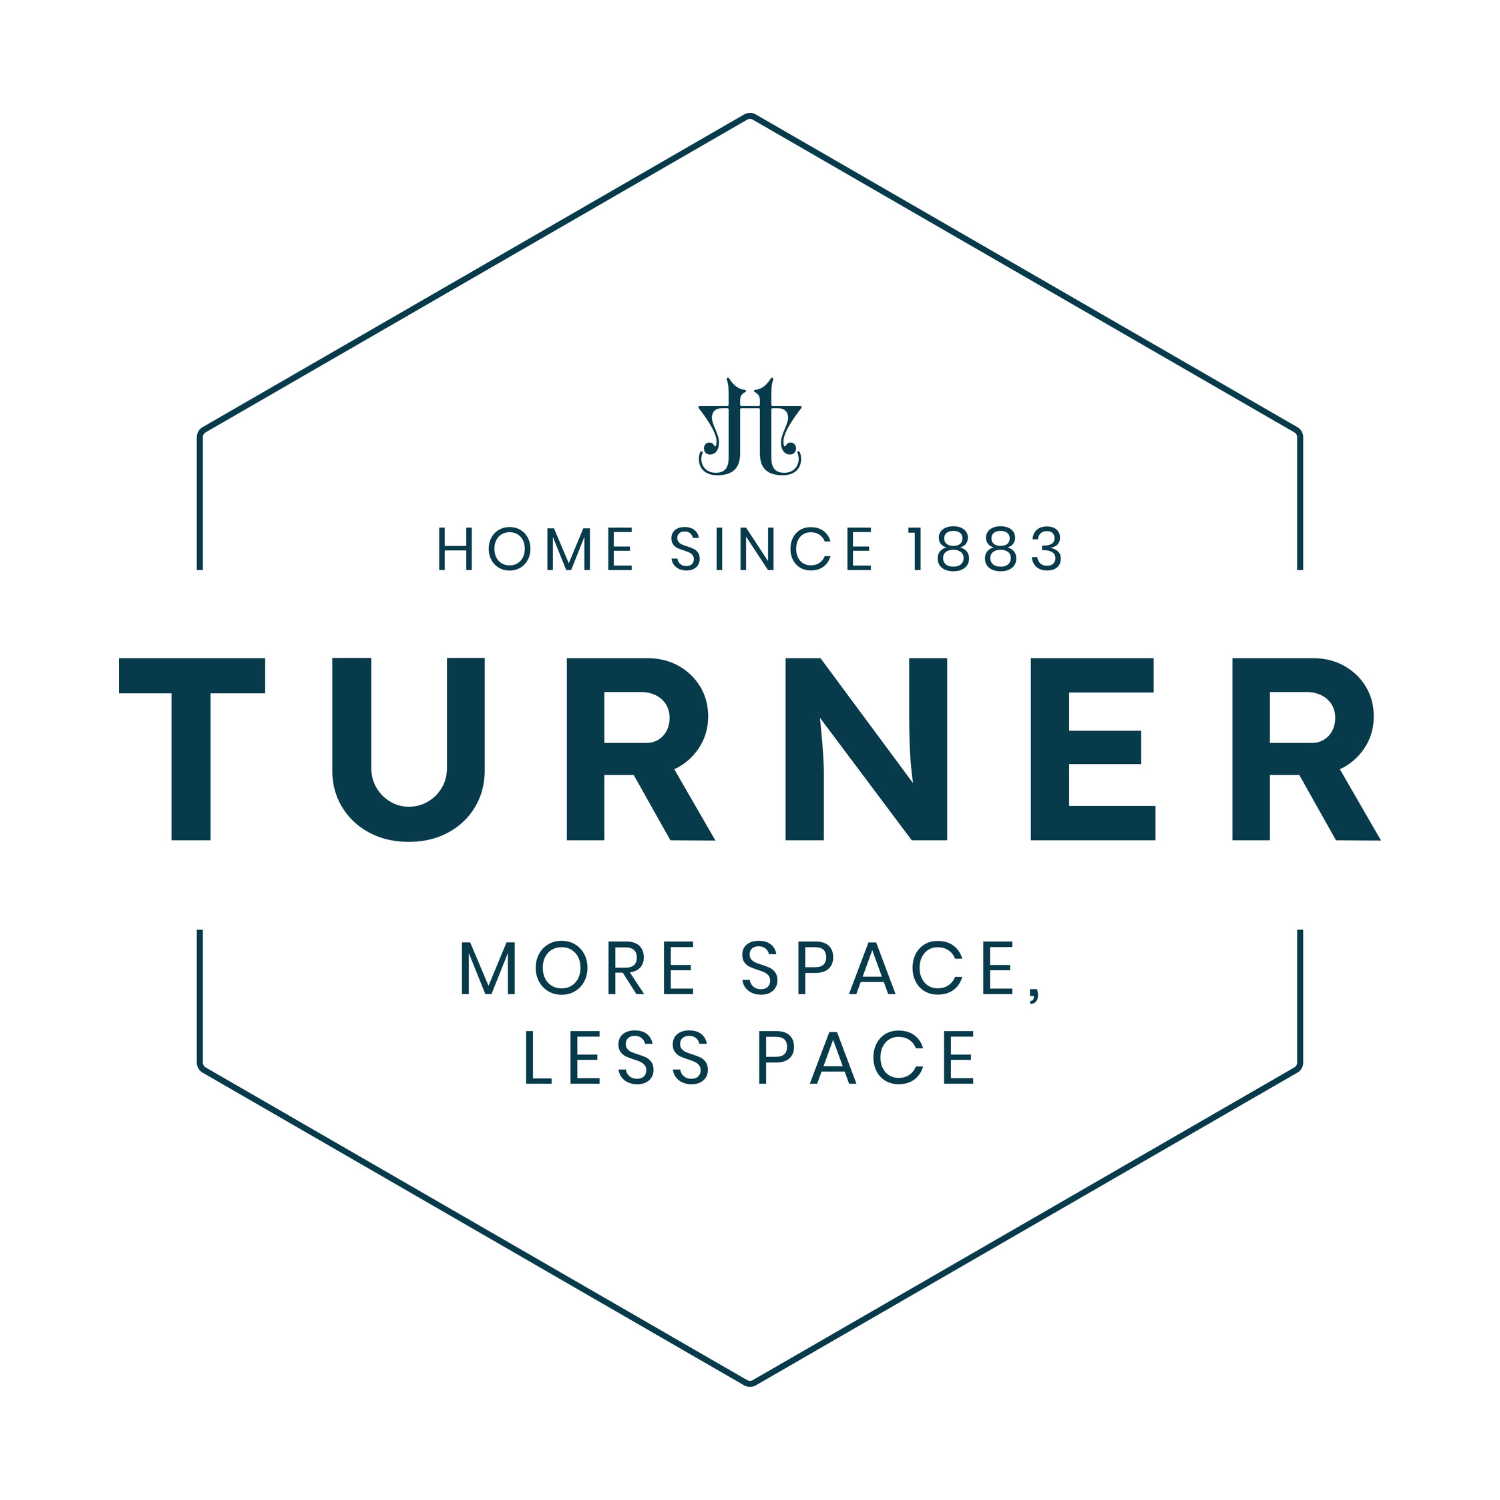 The Turner Home logo